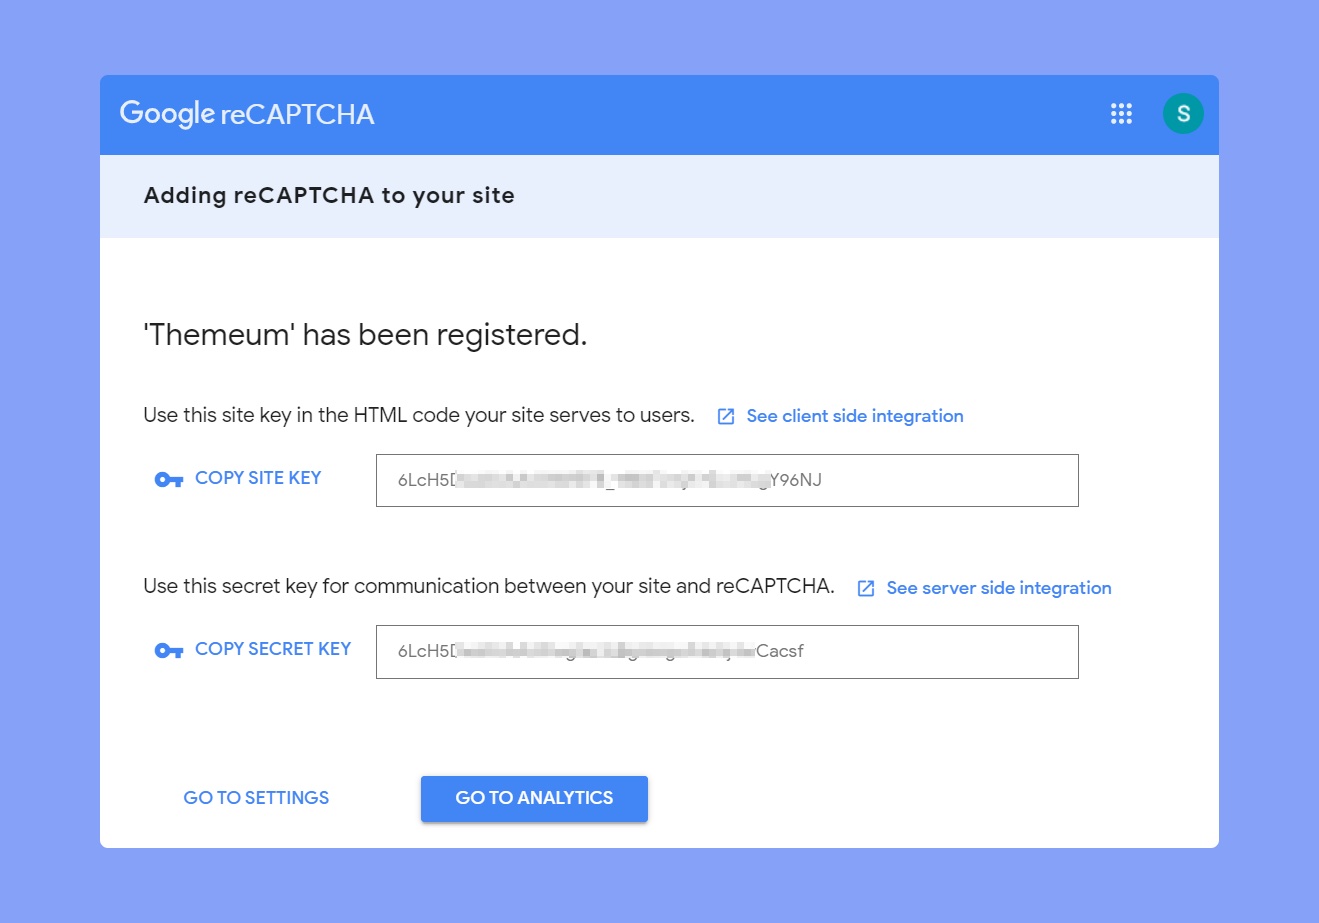 Google reCAPTCHA site key and secret key